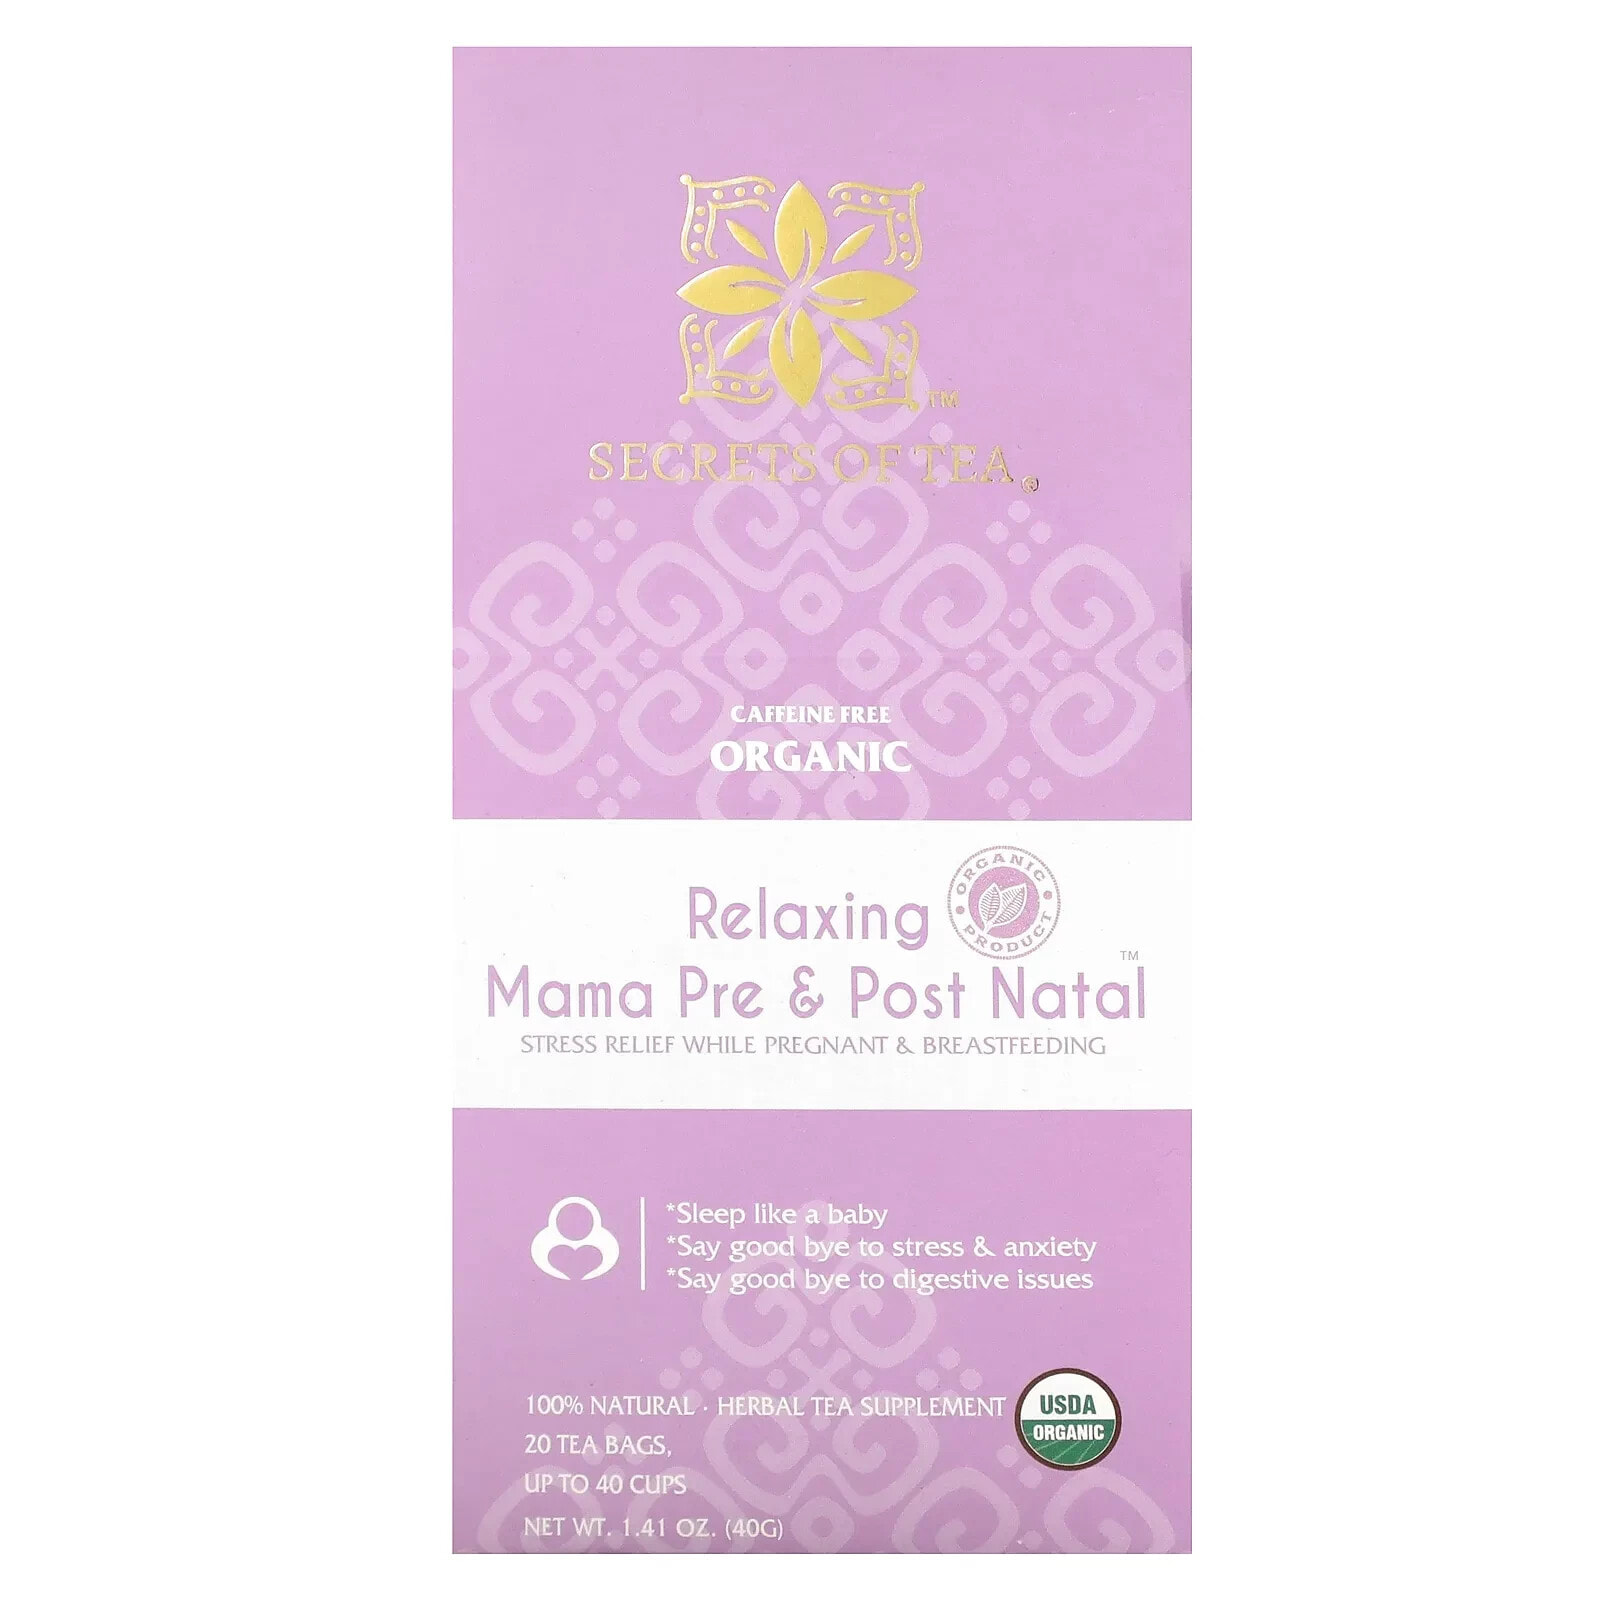 Organic Relaxing Mama Pre & Post Natal, Caffeine Free, 20 Tea Bags, 1.41 oz (40 g)